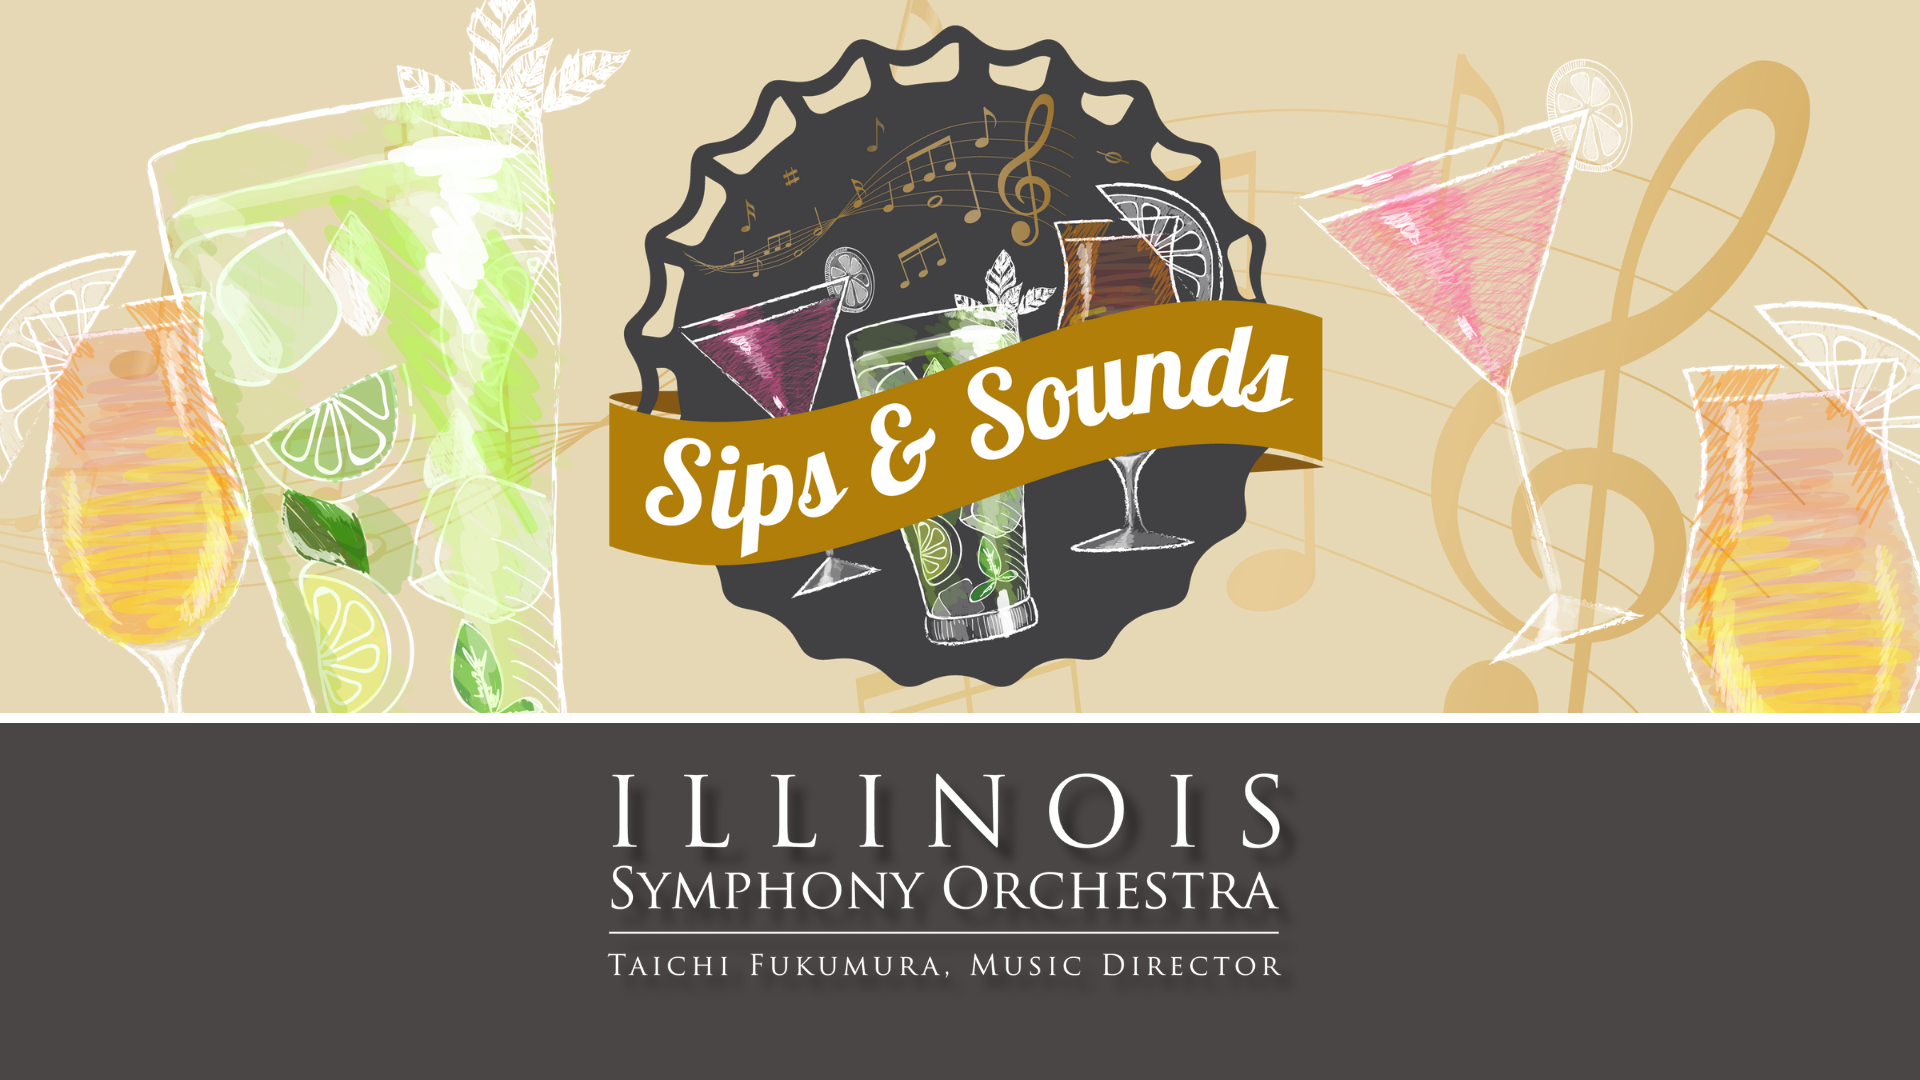 Sips & Sounds, Brass Quintet - Illinois Symphony Orchestra